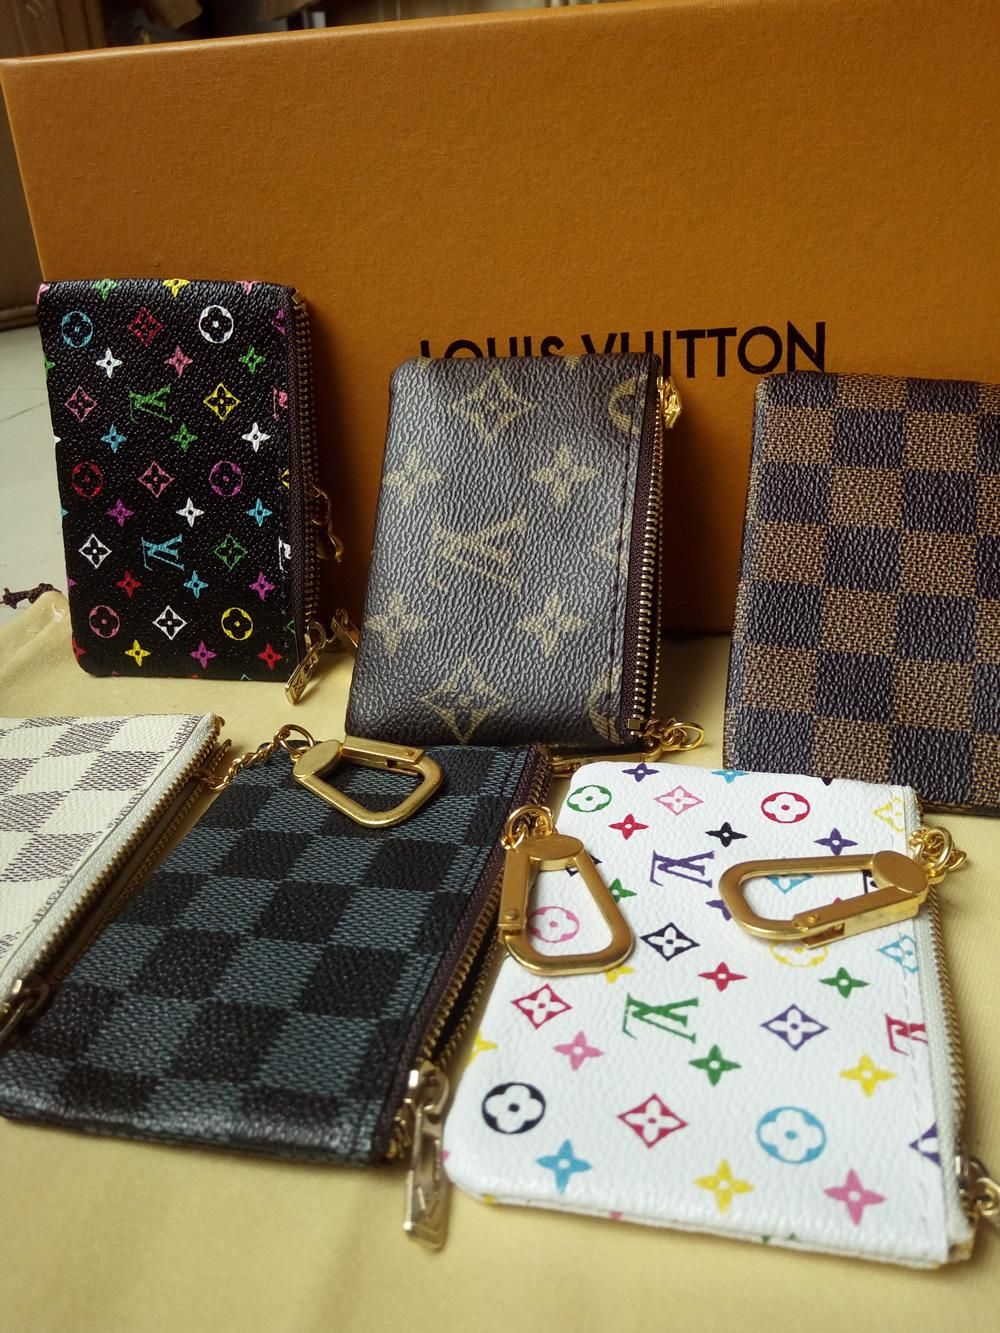 2019 Hotsales Louis Vuitton Fashion Leather Wallet Women Mini Clutch Brand Handbags Tote Purse ...